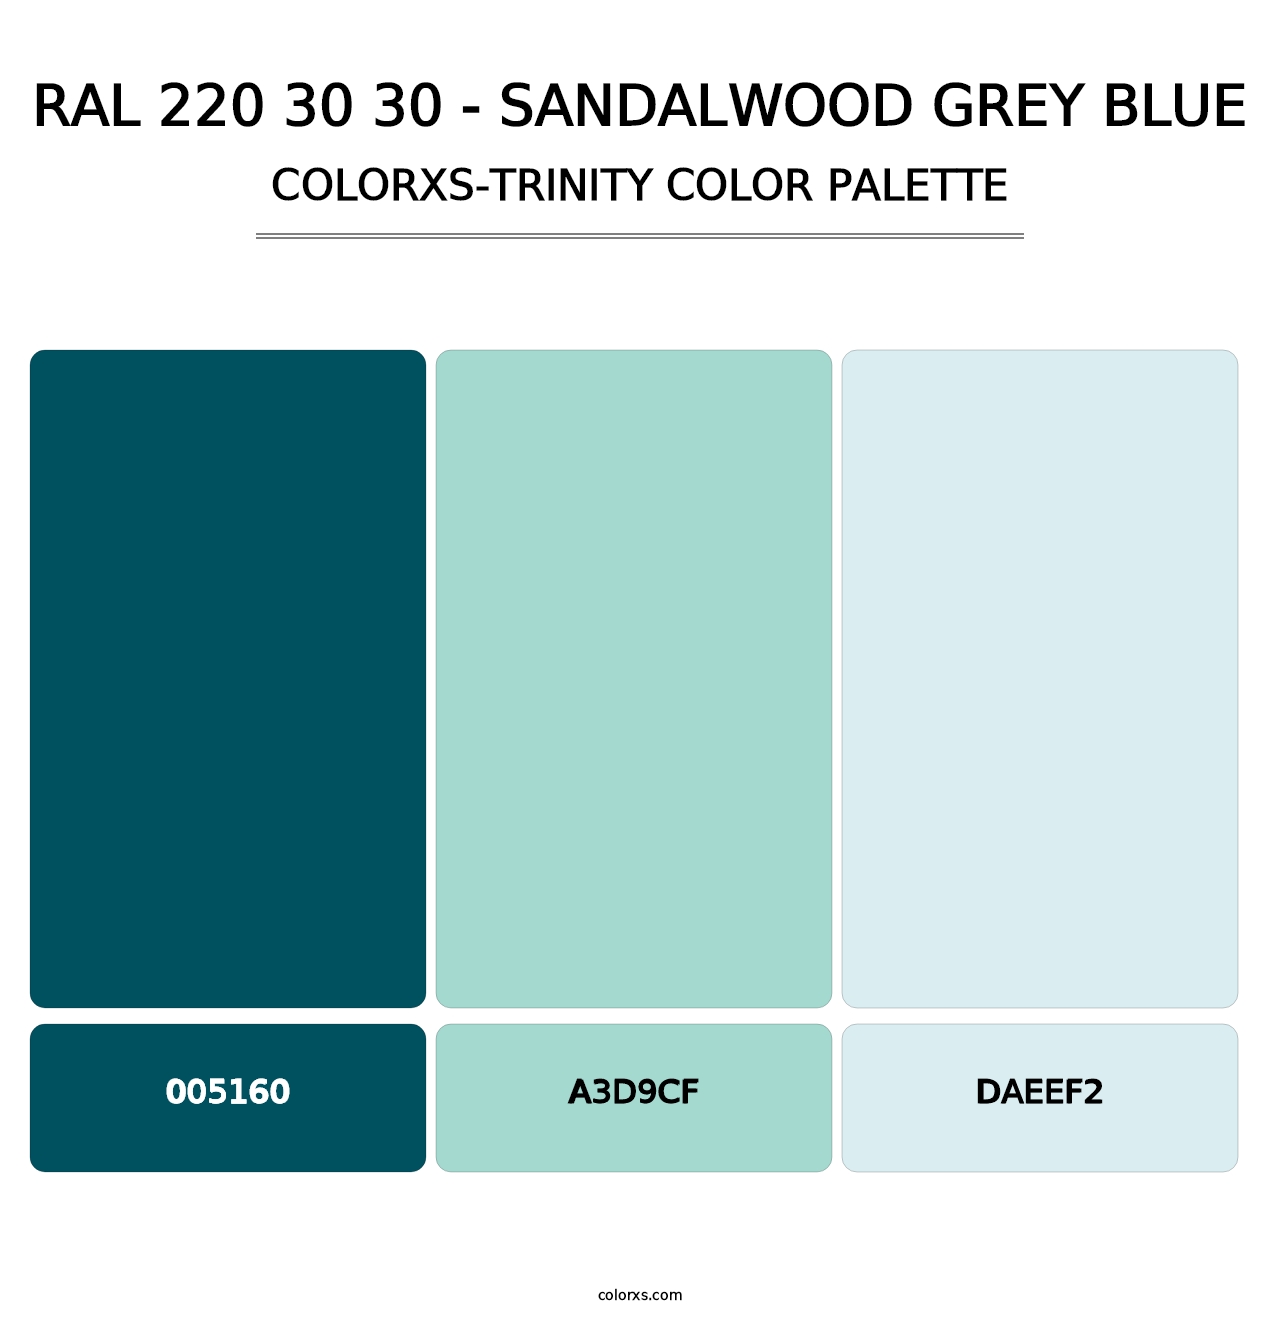 RAL 220 30 30 - Sandalwood Grey Blue - Colorxs Trinity Palette